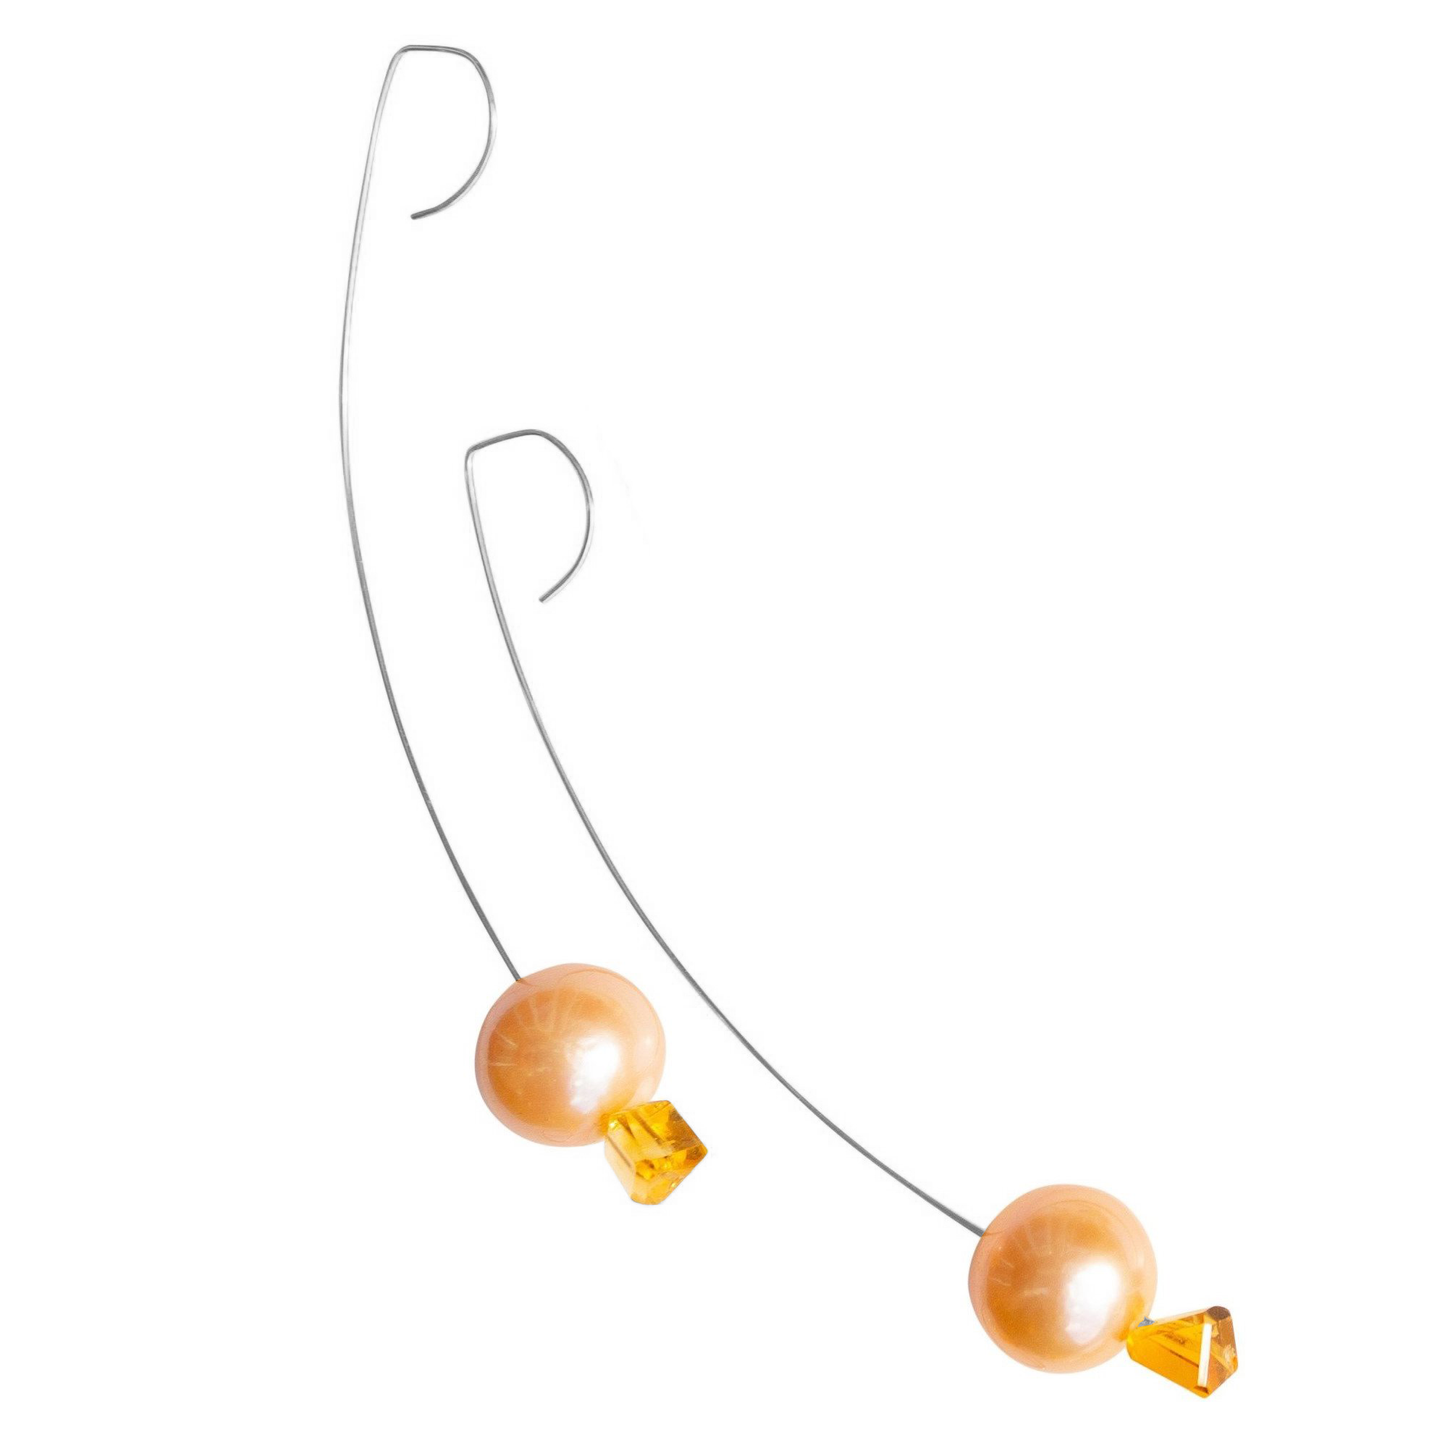 Medium Drop Earrings with Citrine Gemstone and Freshwater Pearls